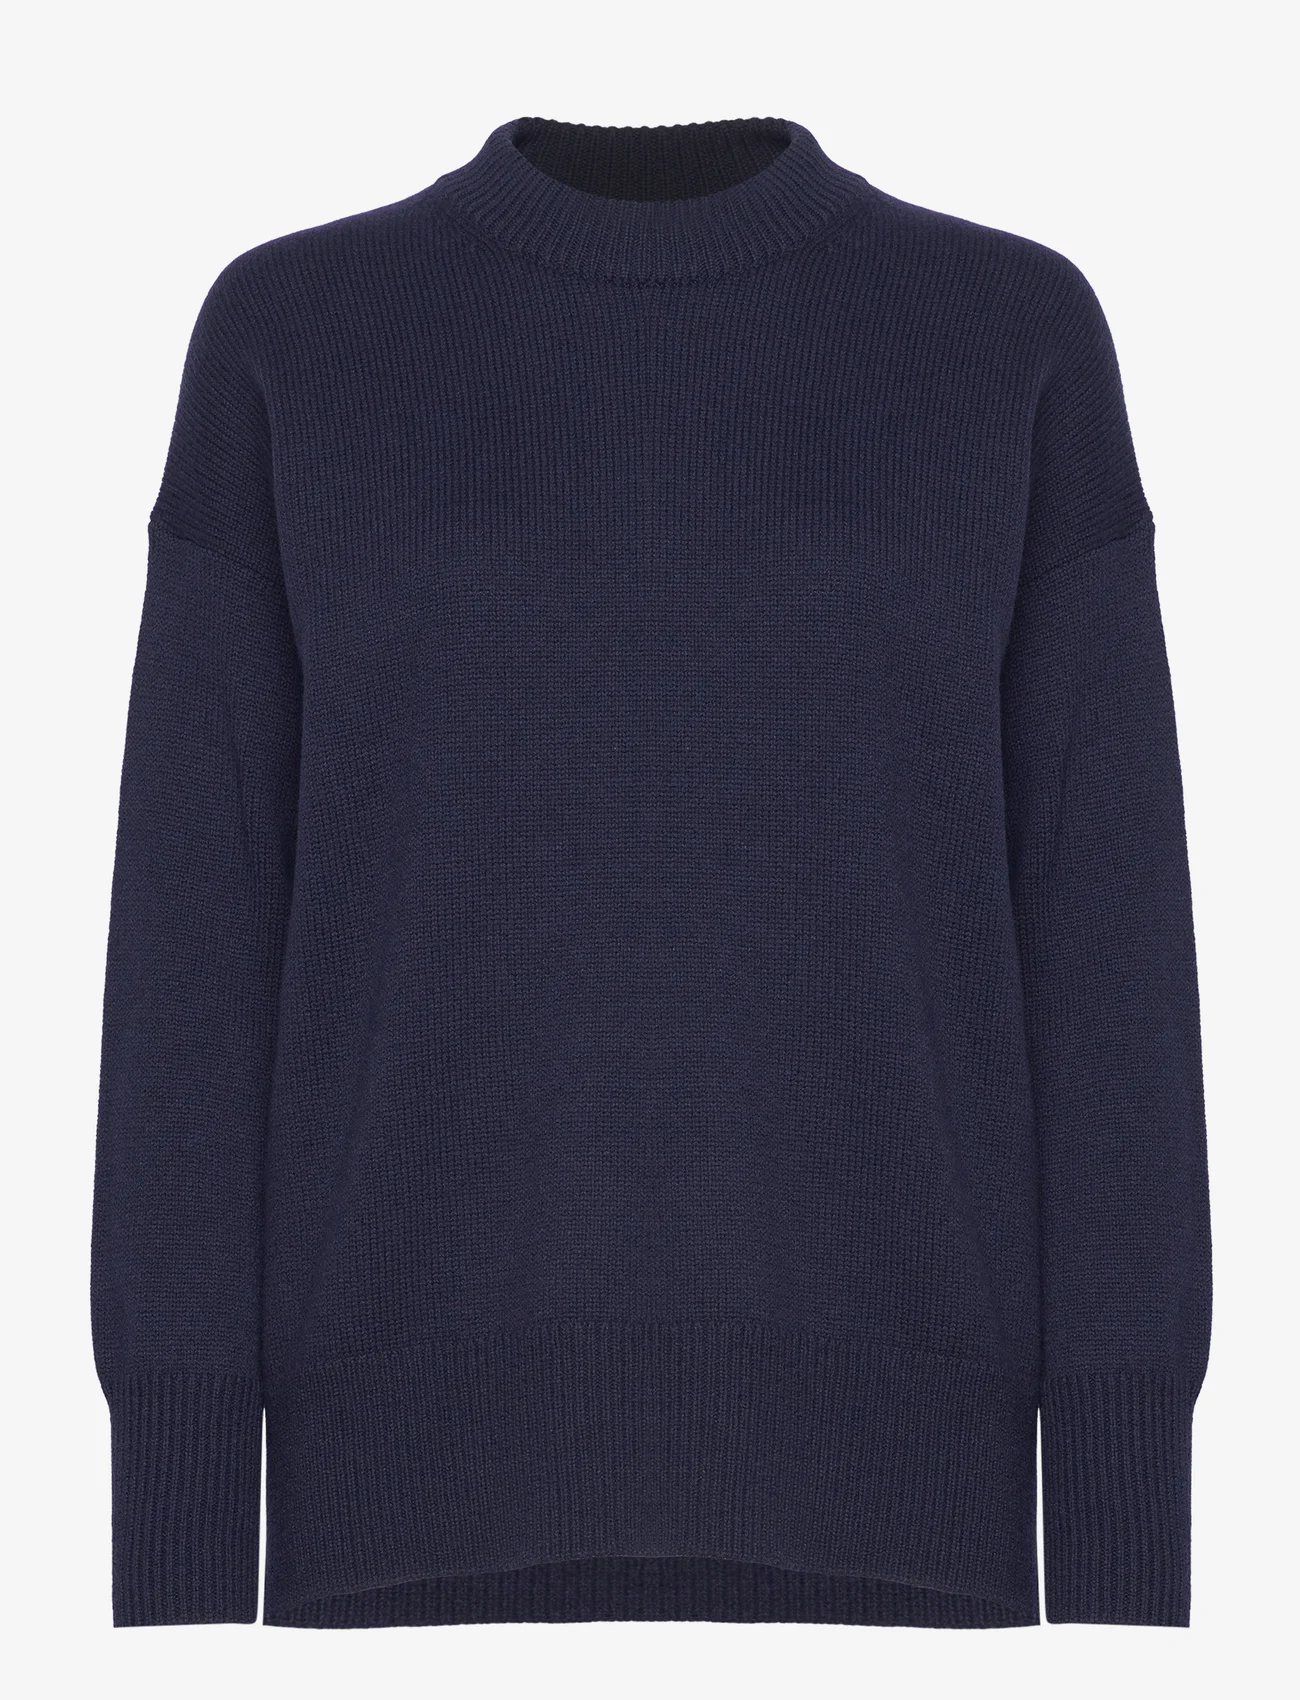 Andiata - Salome knit - trøjer - deep navy blue - 0